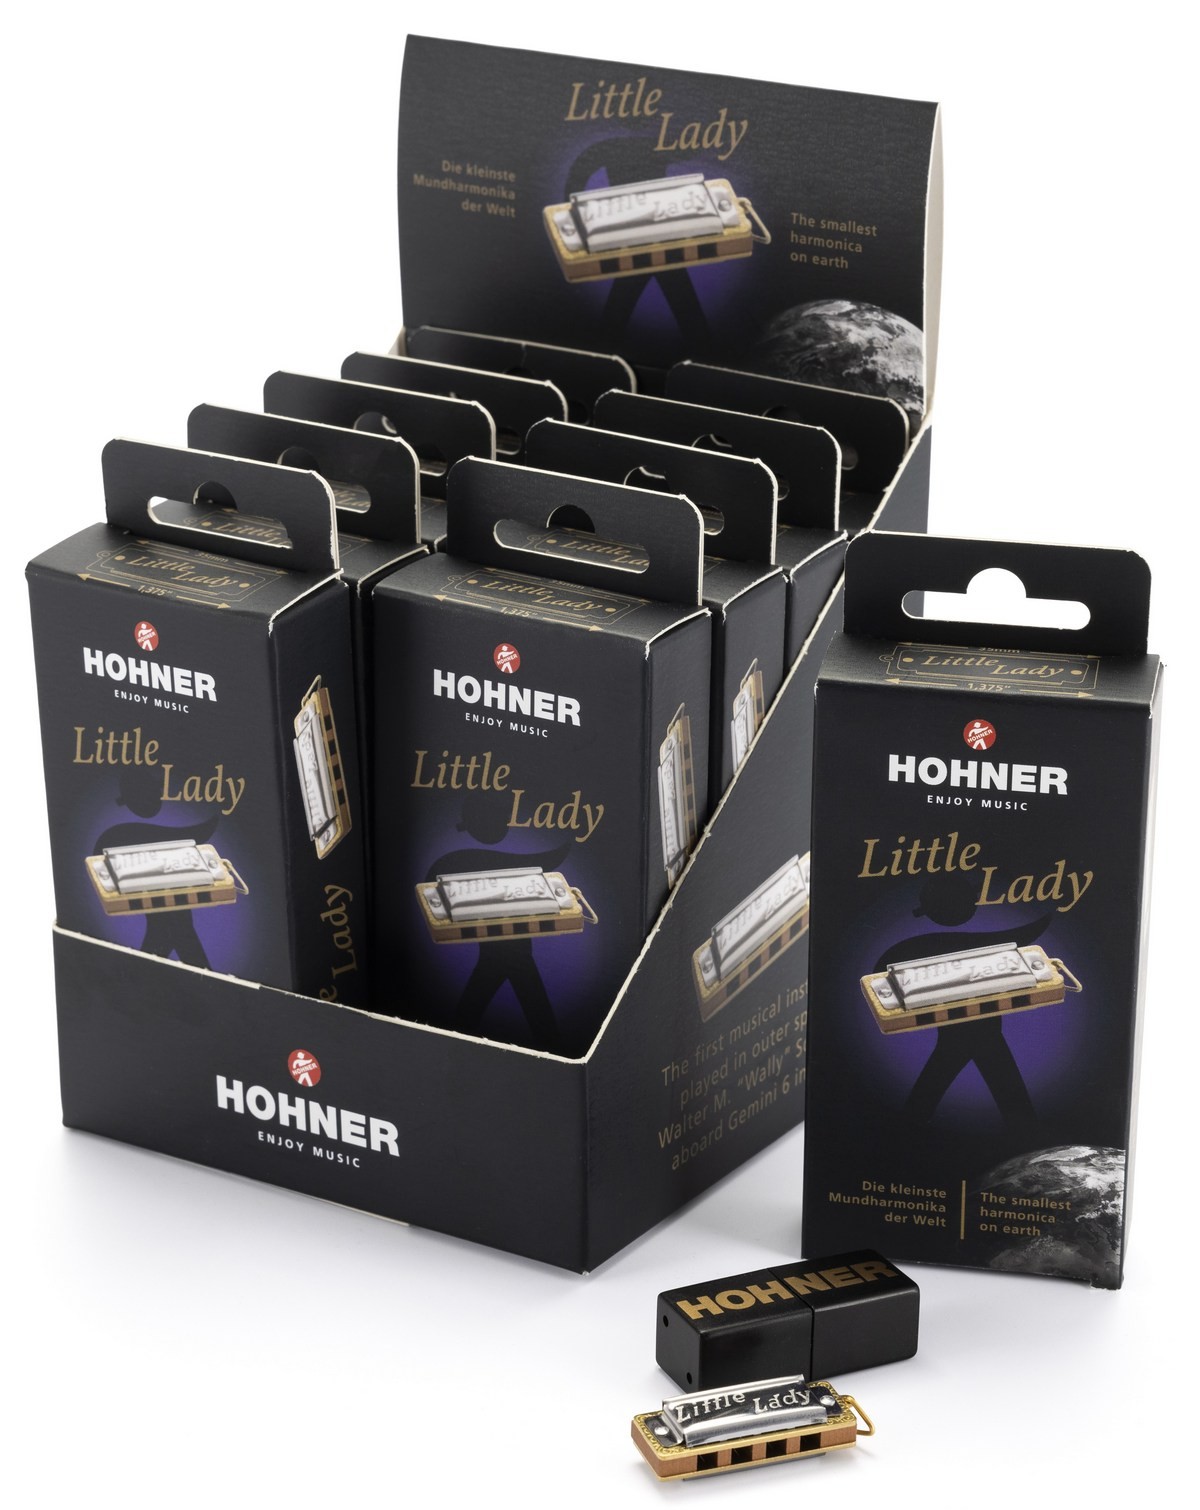 HOHNER LITTLE LADY DISPLAY 10 PCS